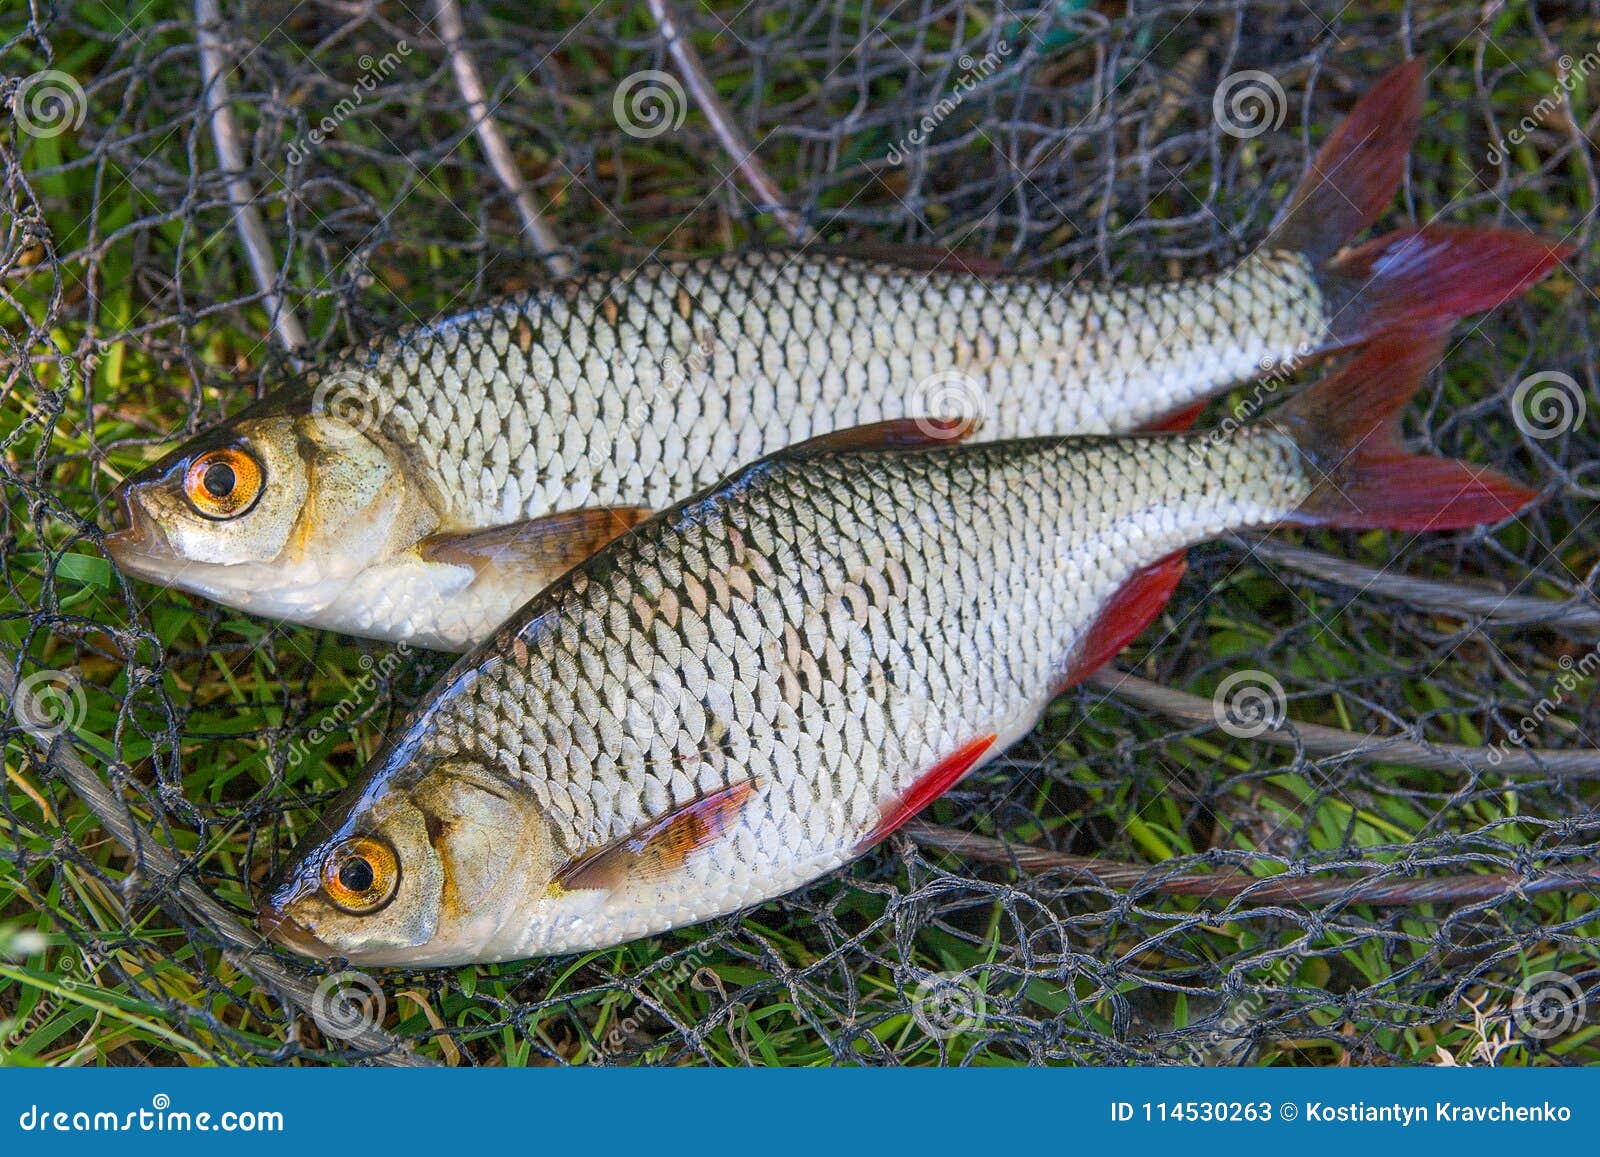 https://thumbs.dreamstime.com/z/close-up-view-two-freshwater-common-rudd-fish-black-fishin-close-up-view-two-freshwater-common-rudd-fish-known-as-114530263.jpg